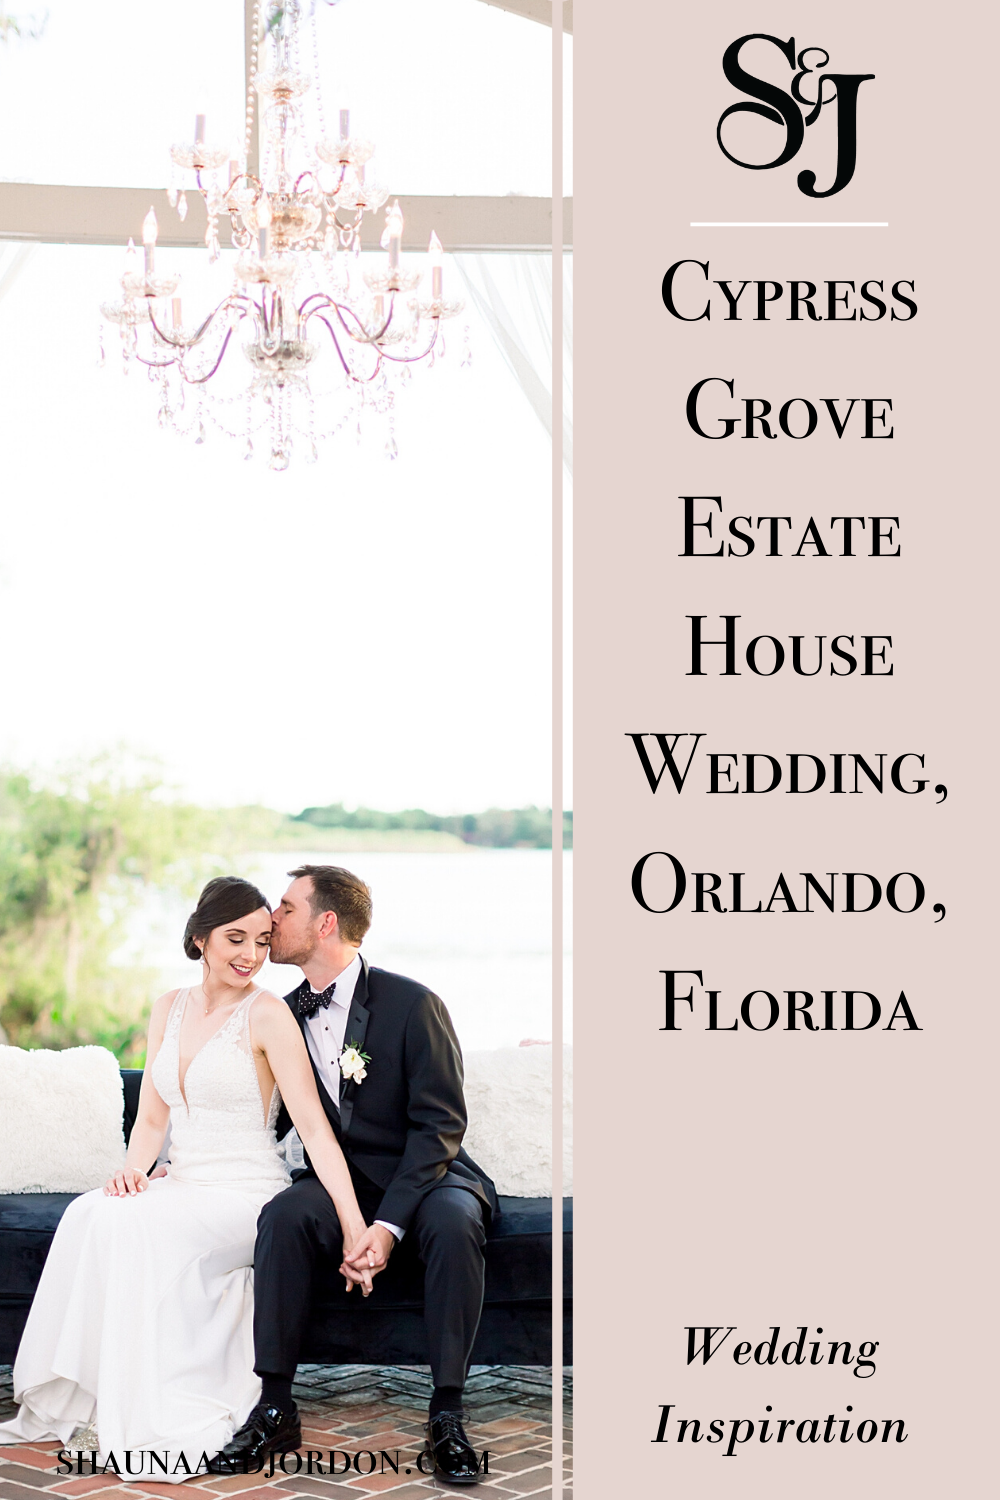 Cypress Grove Estate House Wedding Orlando Florida_Shauna and Jordon Photography2